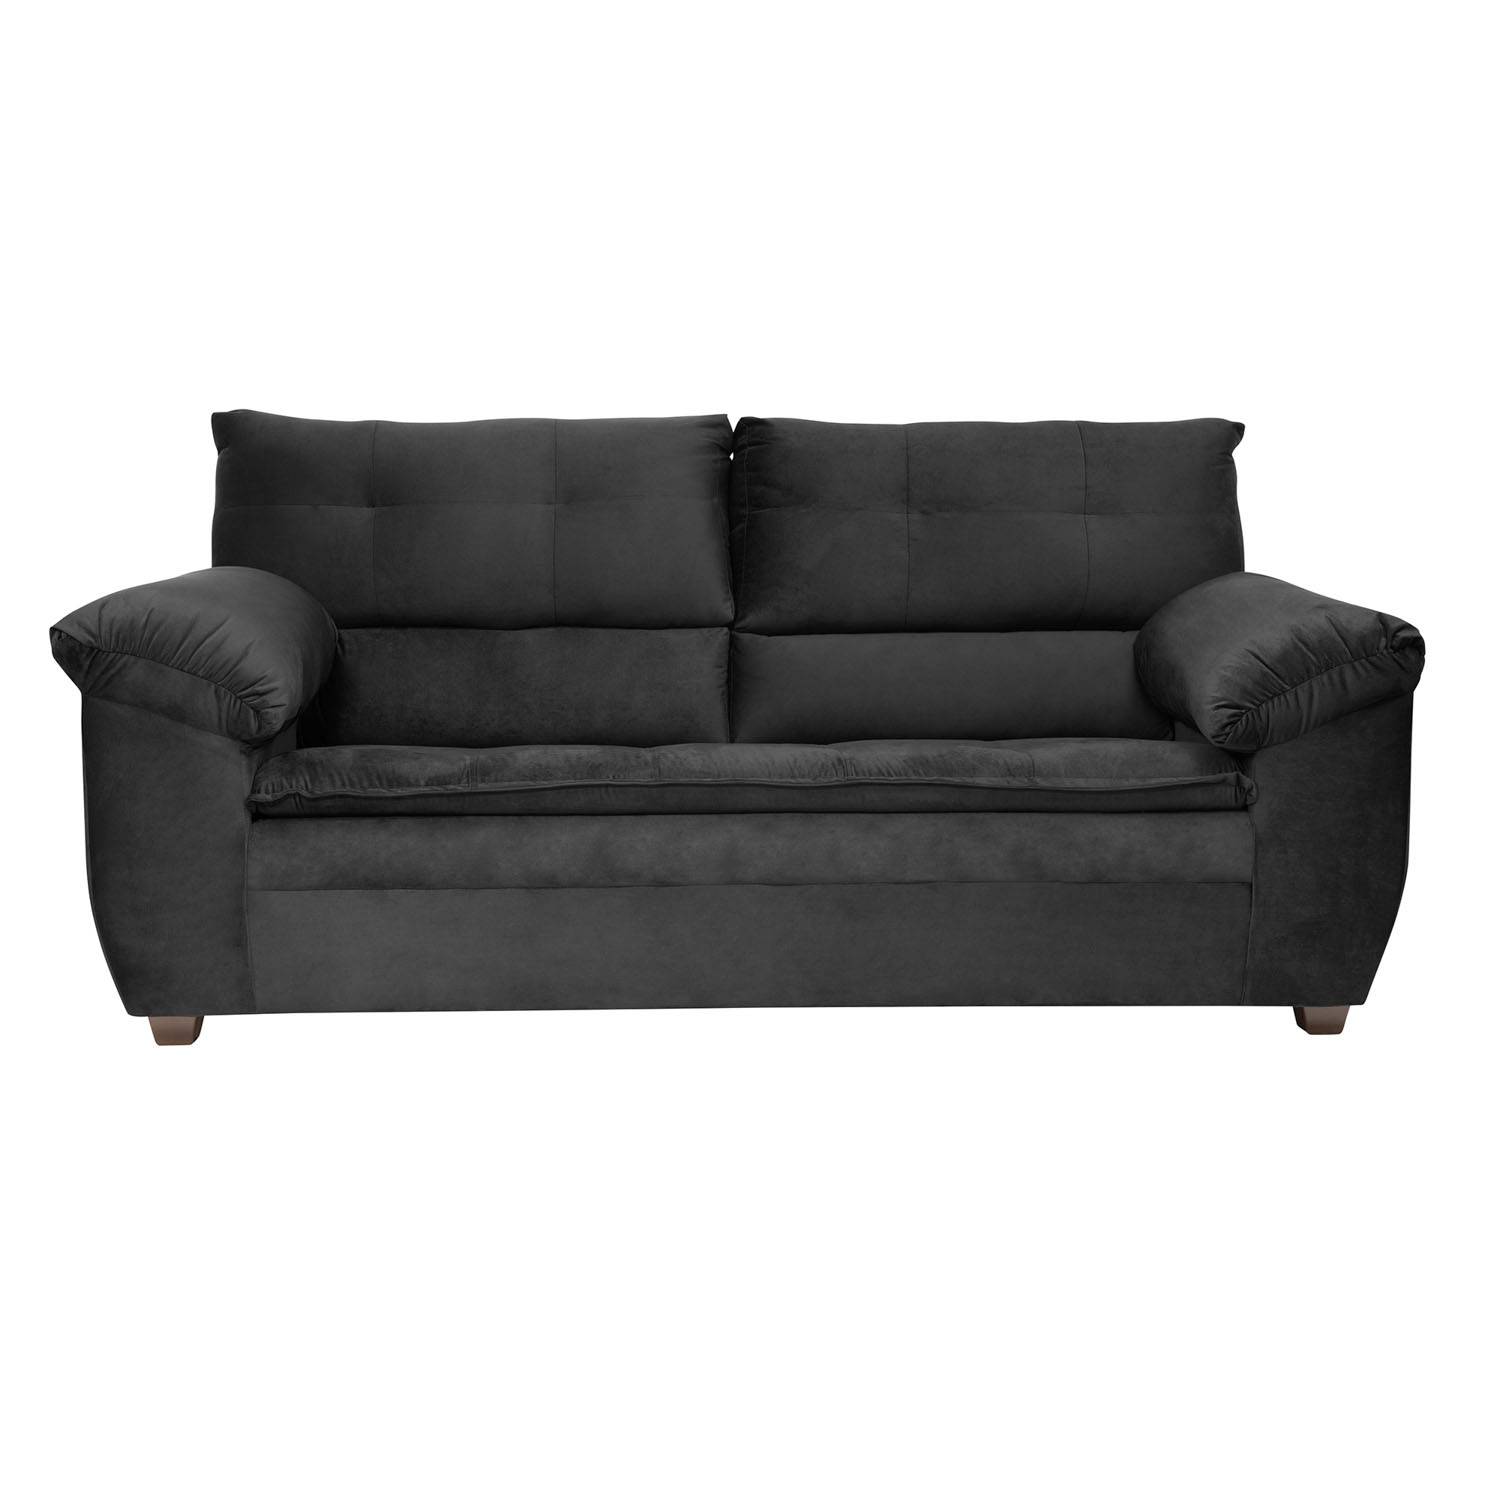 Sofa Liverpool Negro 3 Cuerpos 215x95x85 Header2 2